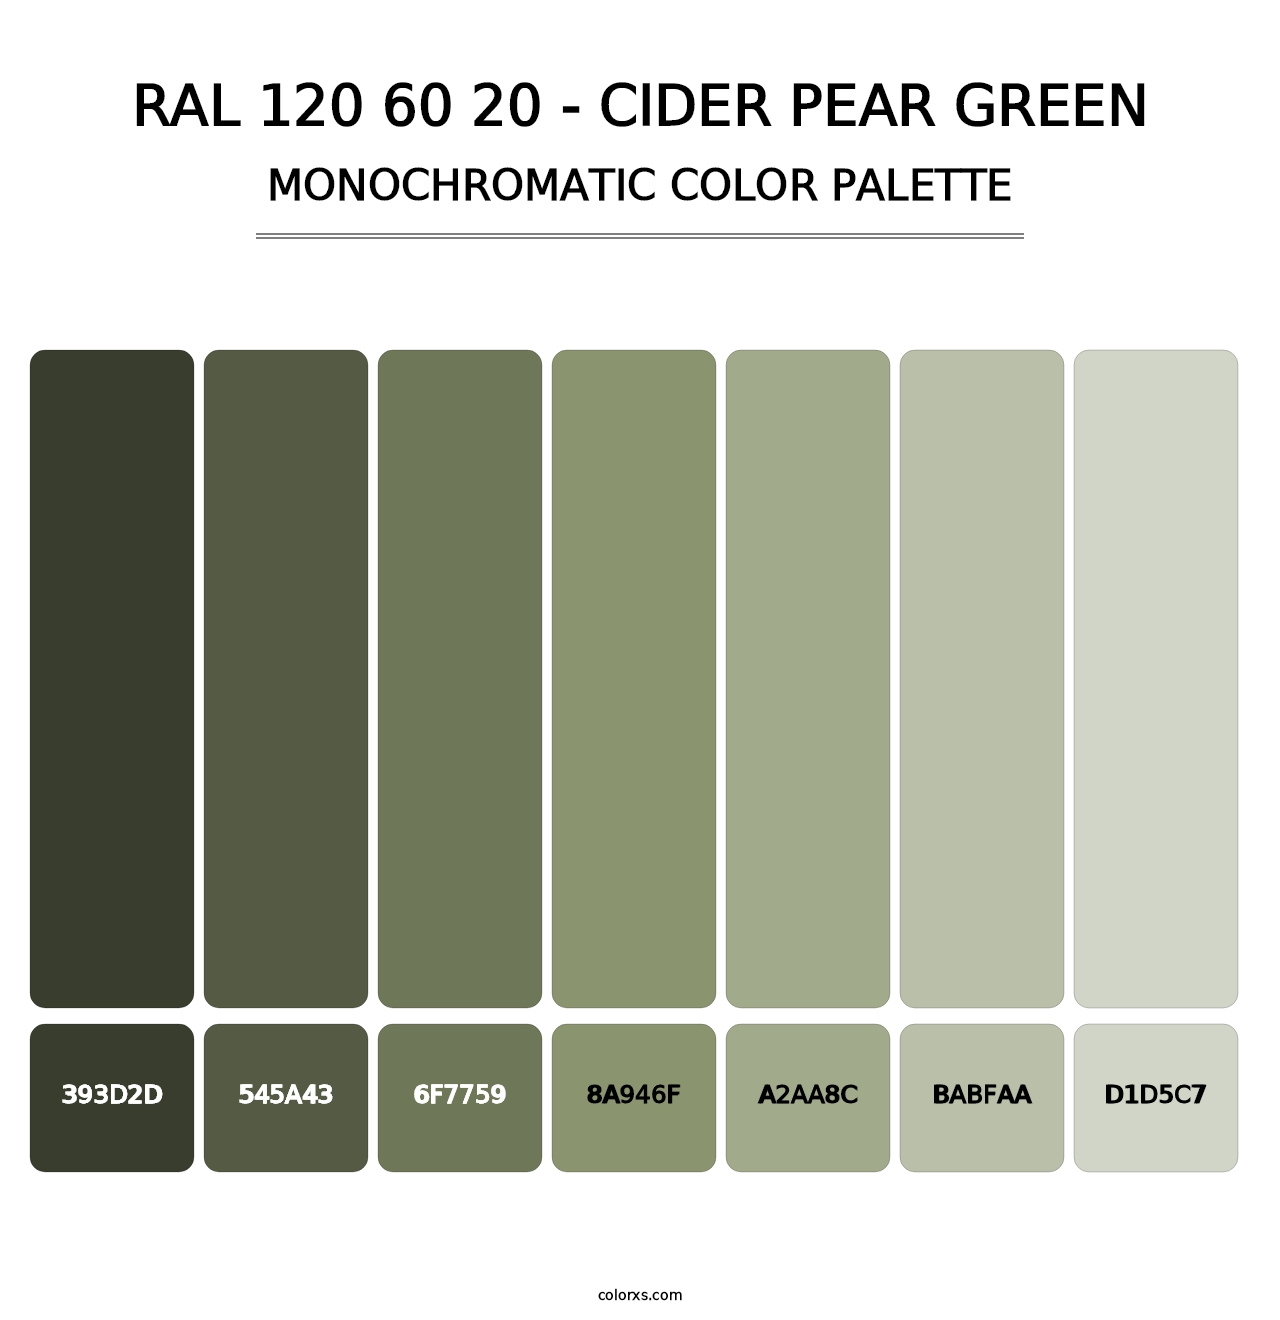 RAL 120 60 20 - Cider Pear Green - Monochromatic Color Palette